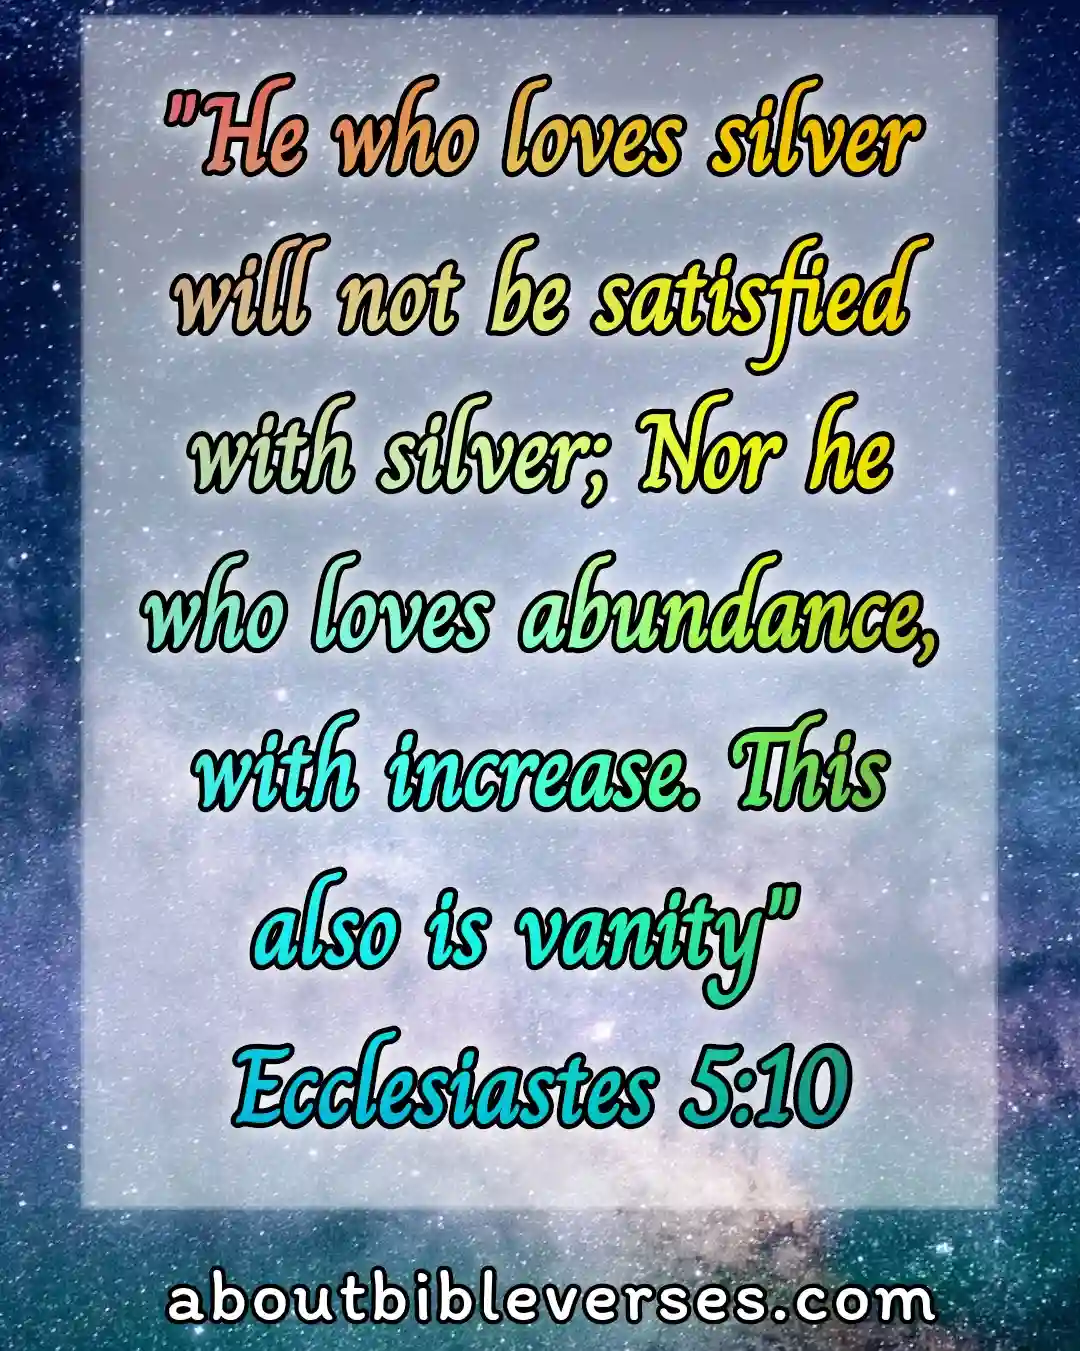 Verses Do Not Love Money (Ecclesiastes 5:10)